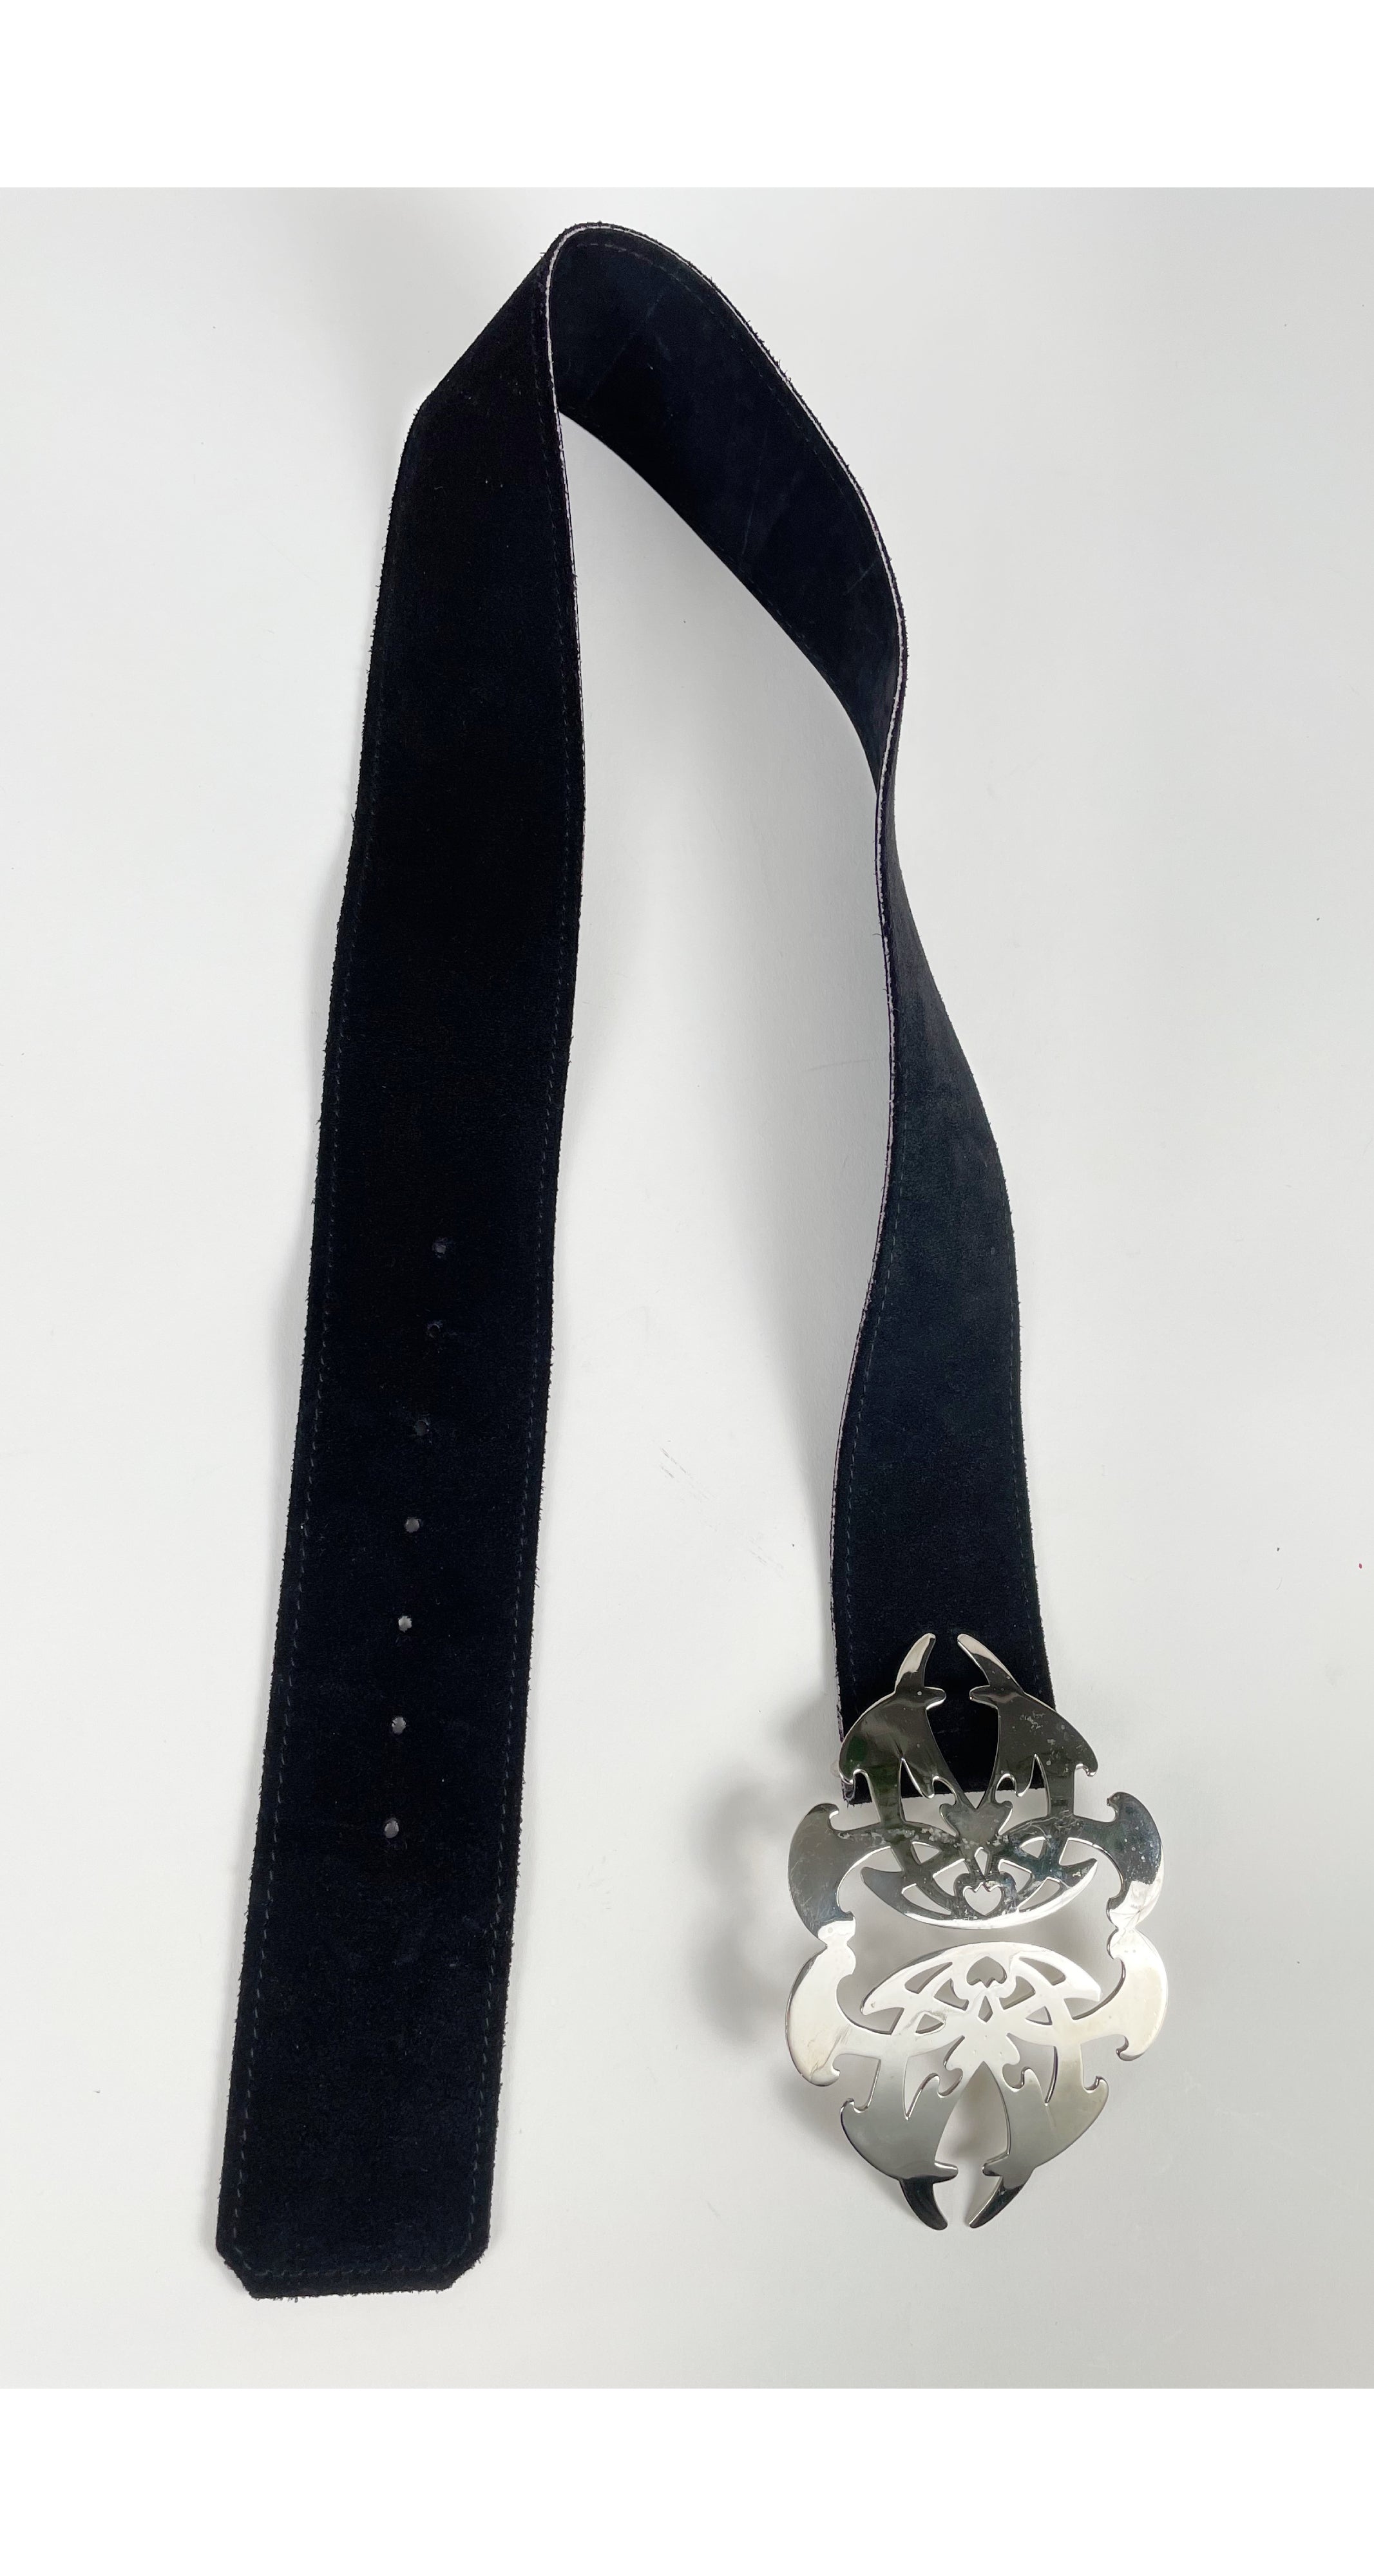 1970s Ornate Silver Buckle Black Suede Belt